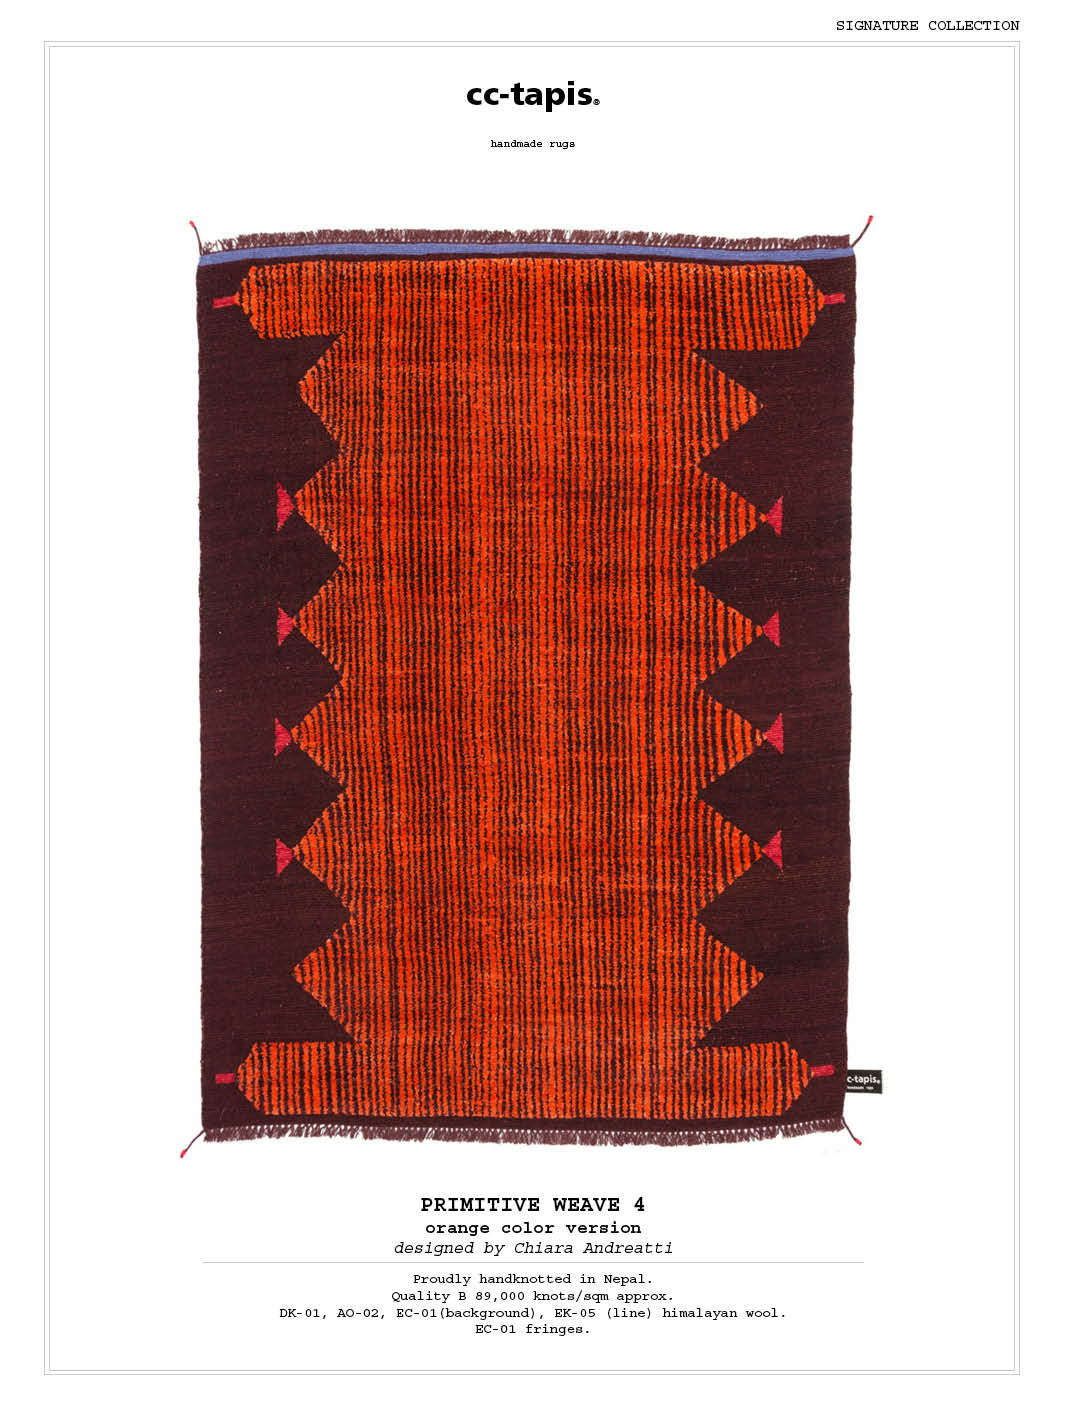 SIGNATURE Handmade rug By cc-tapis